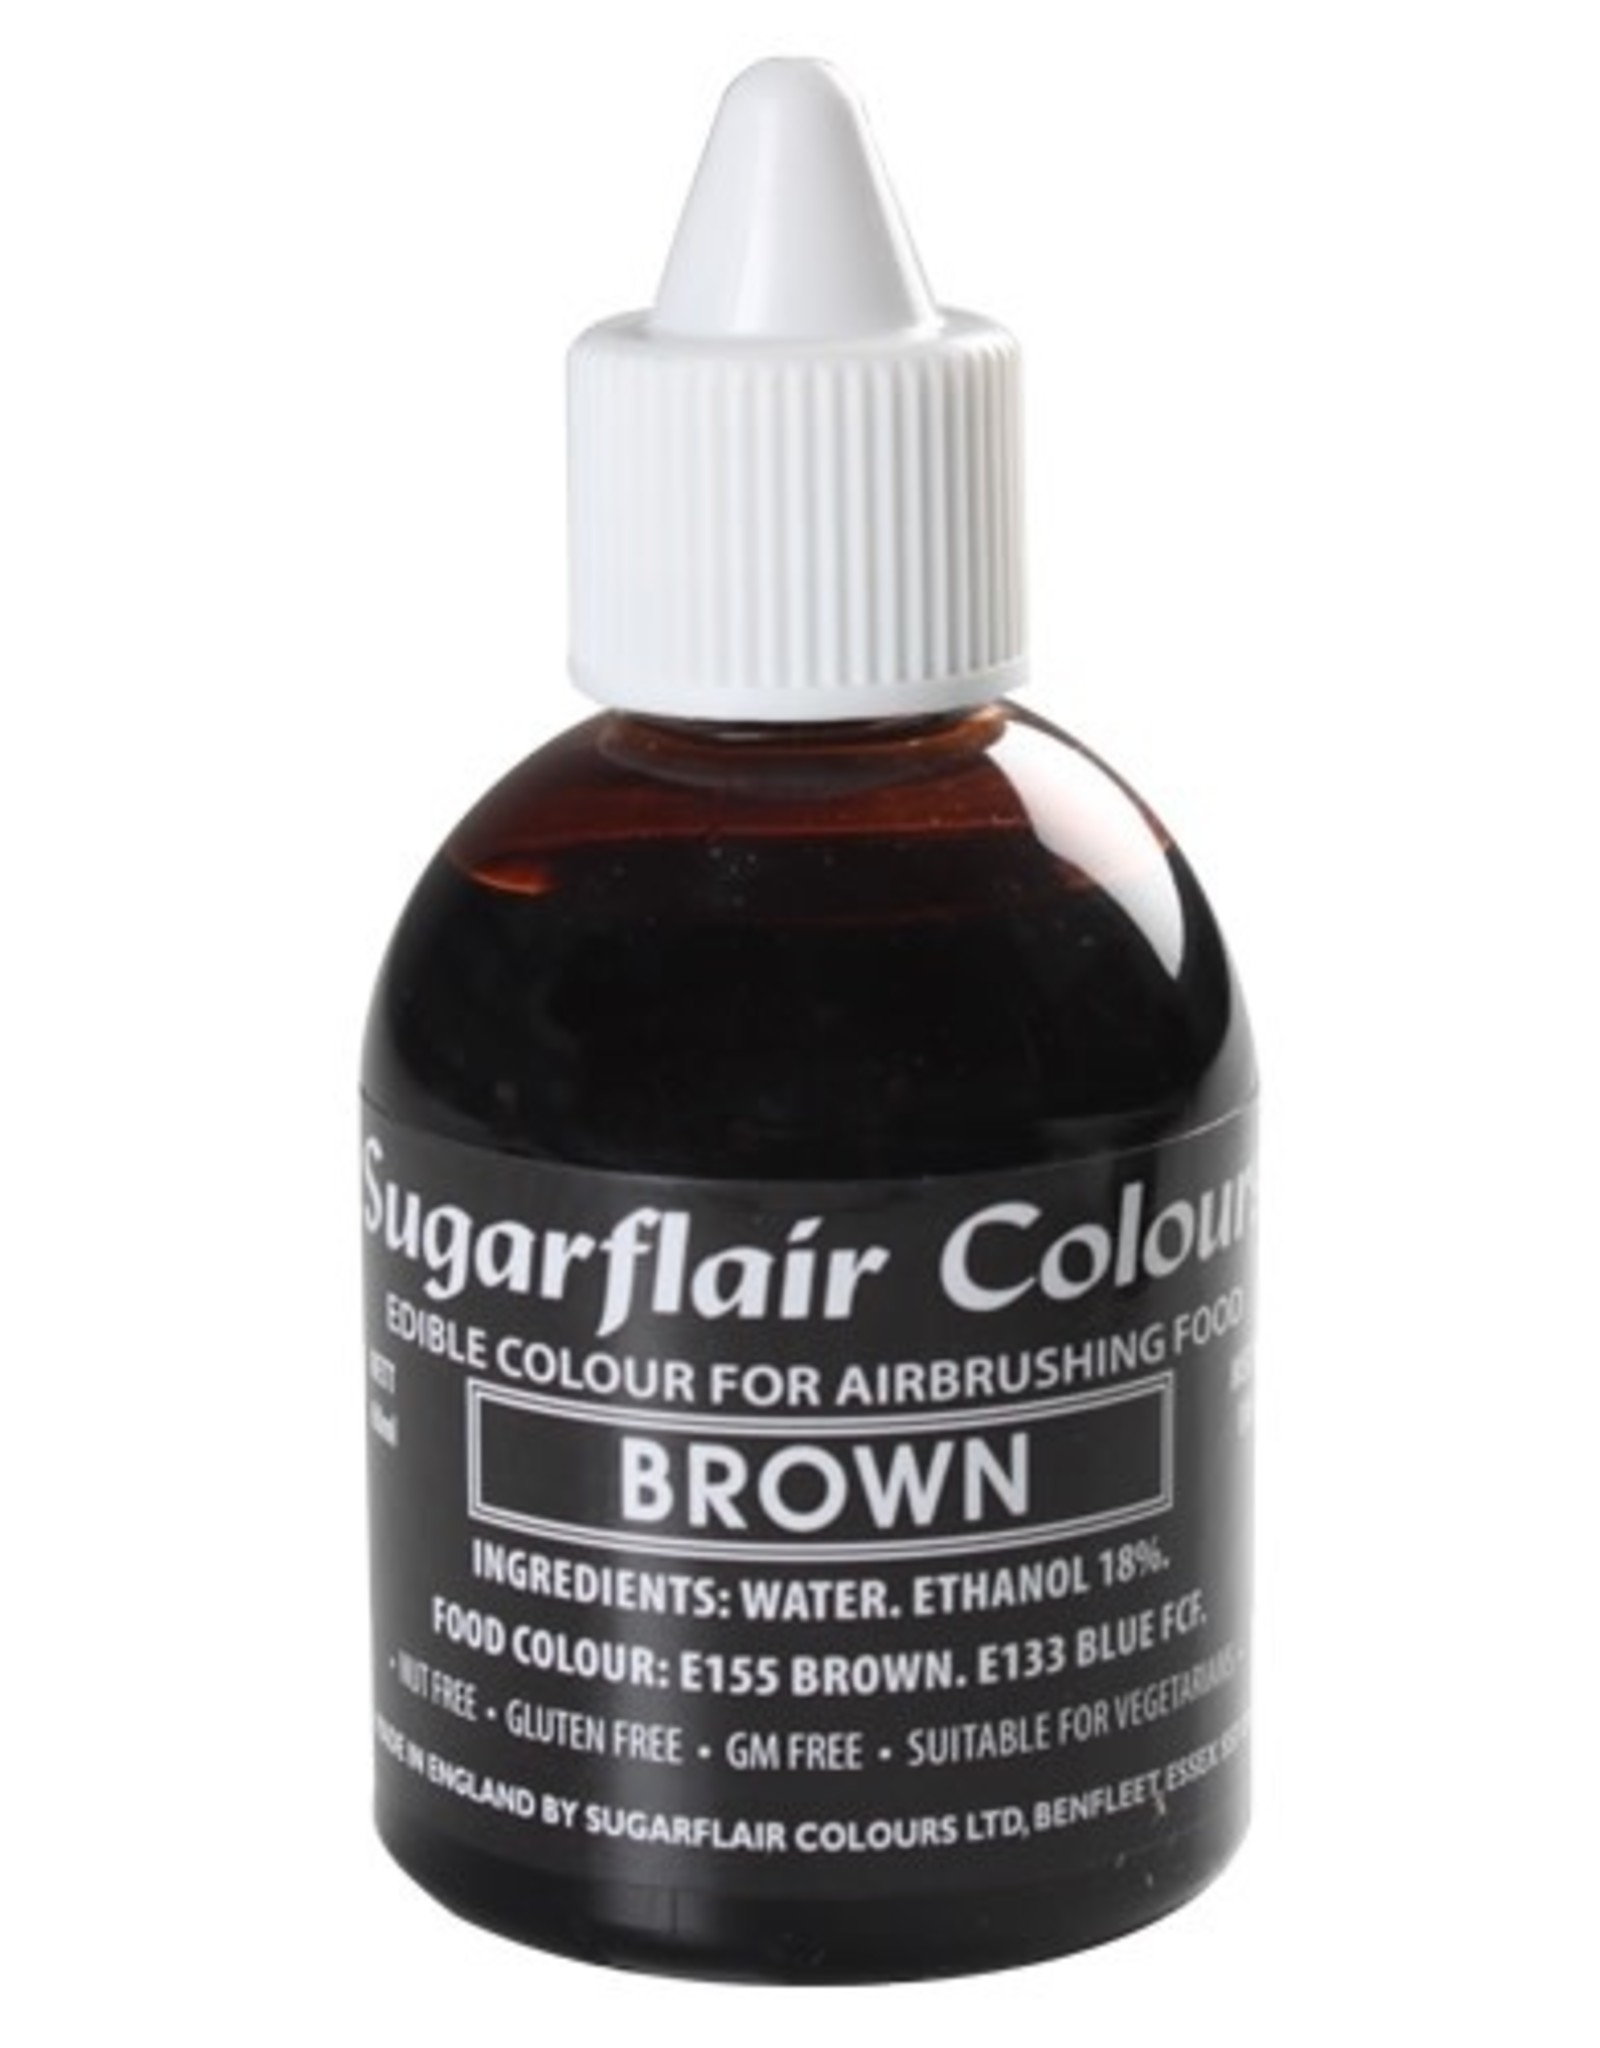 Sugarflair Sugarflair Airbrush Colouring -Brown- 60ml